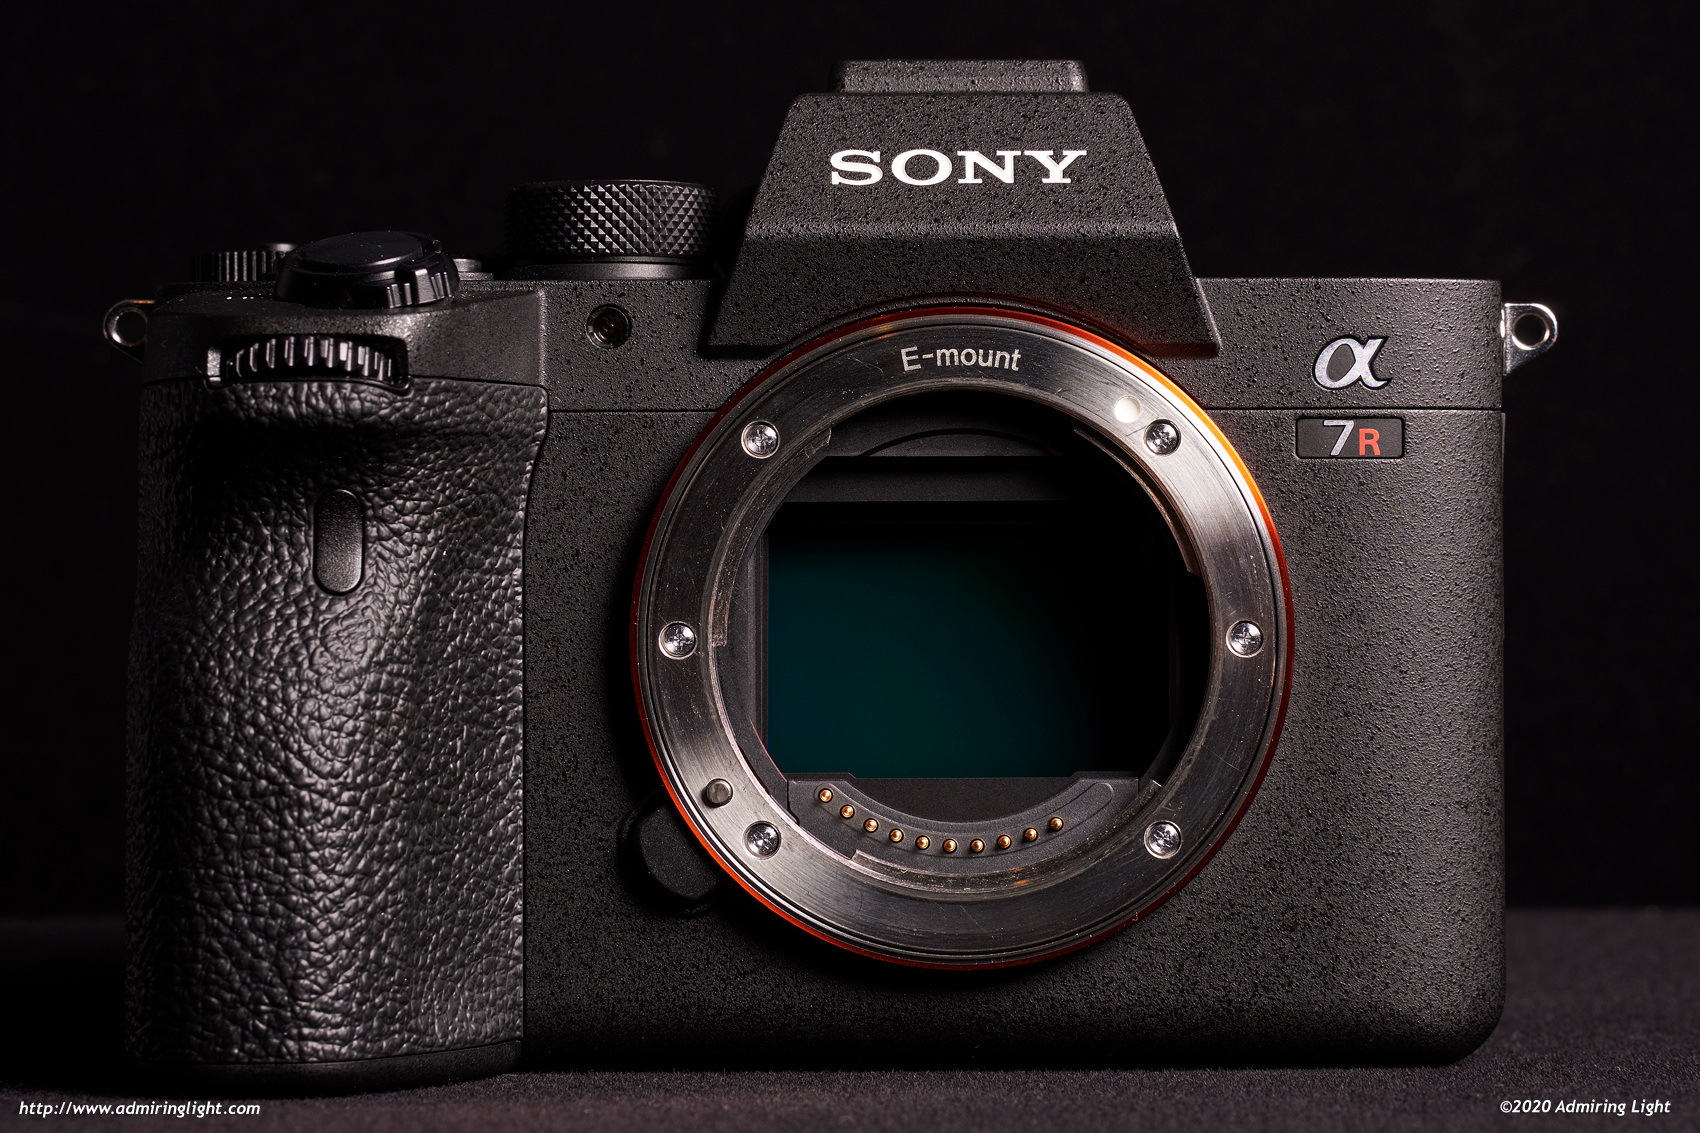 Sony Alpha 7R IV Full Frame Mirrorless Interchangeable Lens Camera w/High Resolution 61MP Sensor and Fe 50mm F1.8 Lens Black